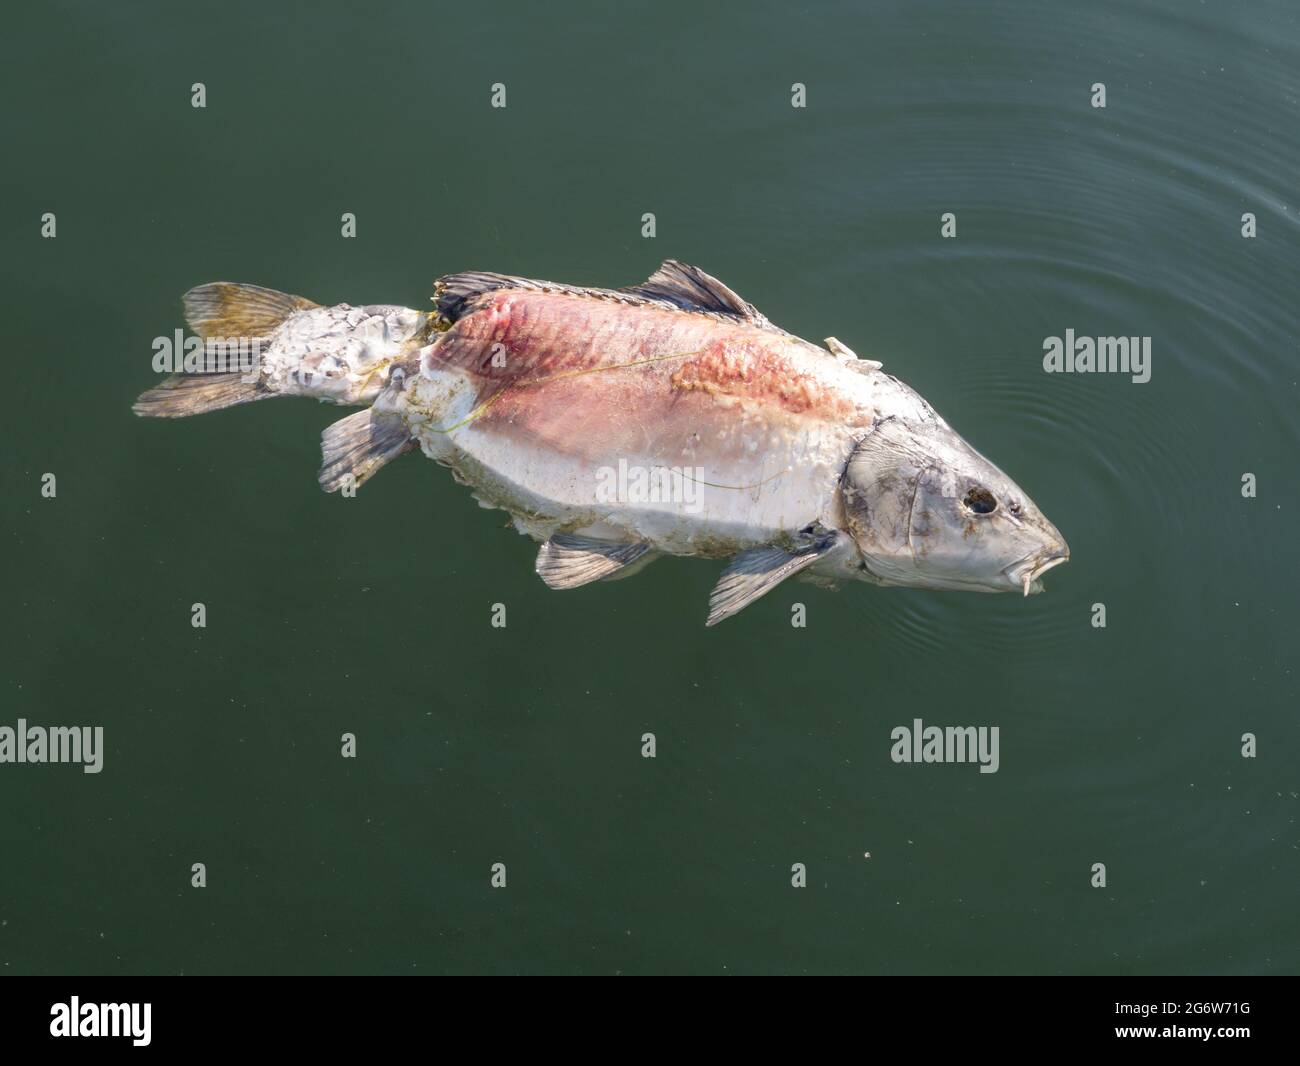 Common carp, Cyprinus carpio, dead fish floating in water, Haringvliet, Netherlands Stock Photo